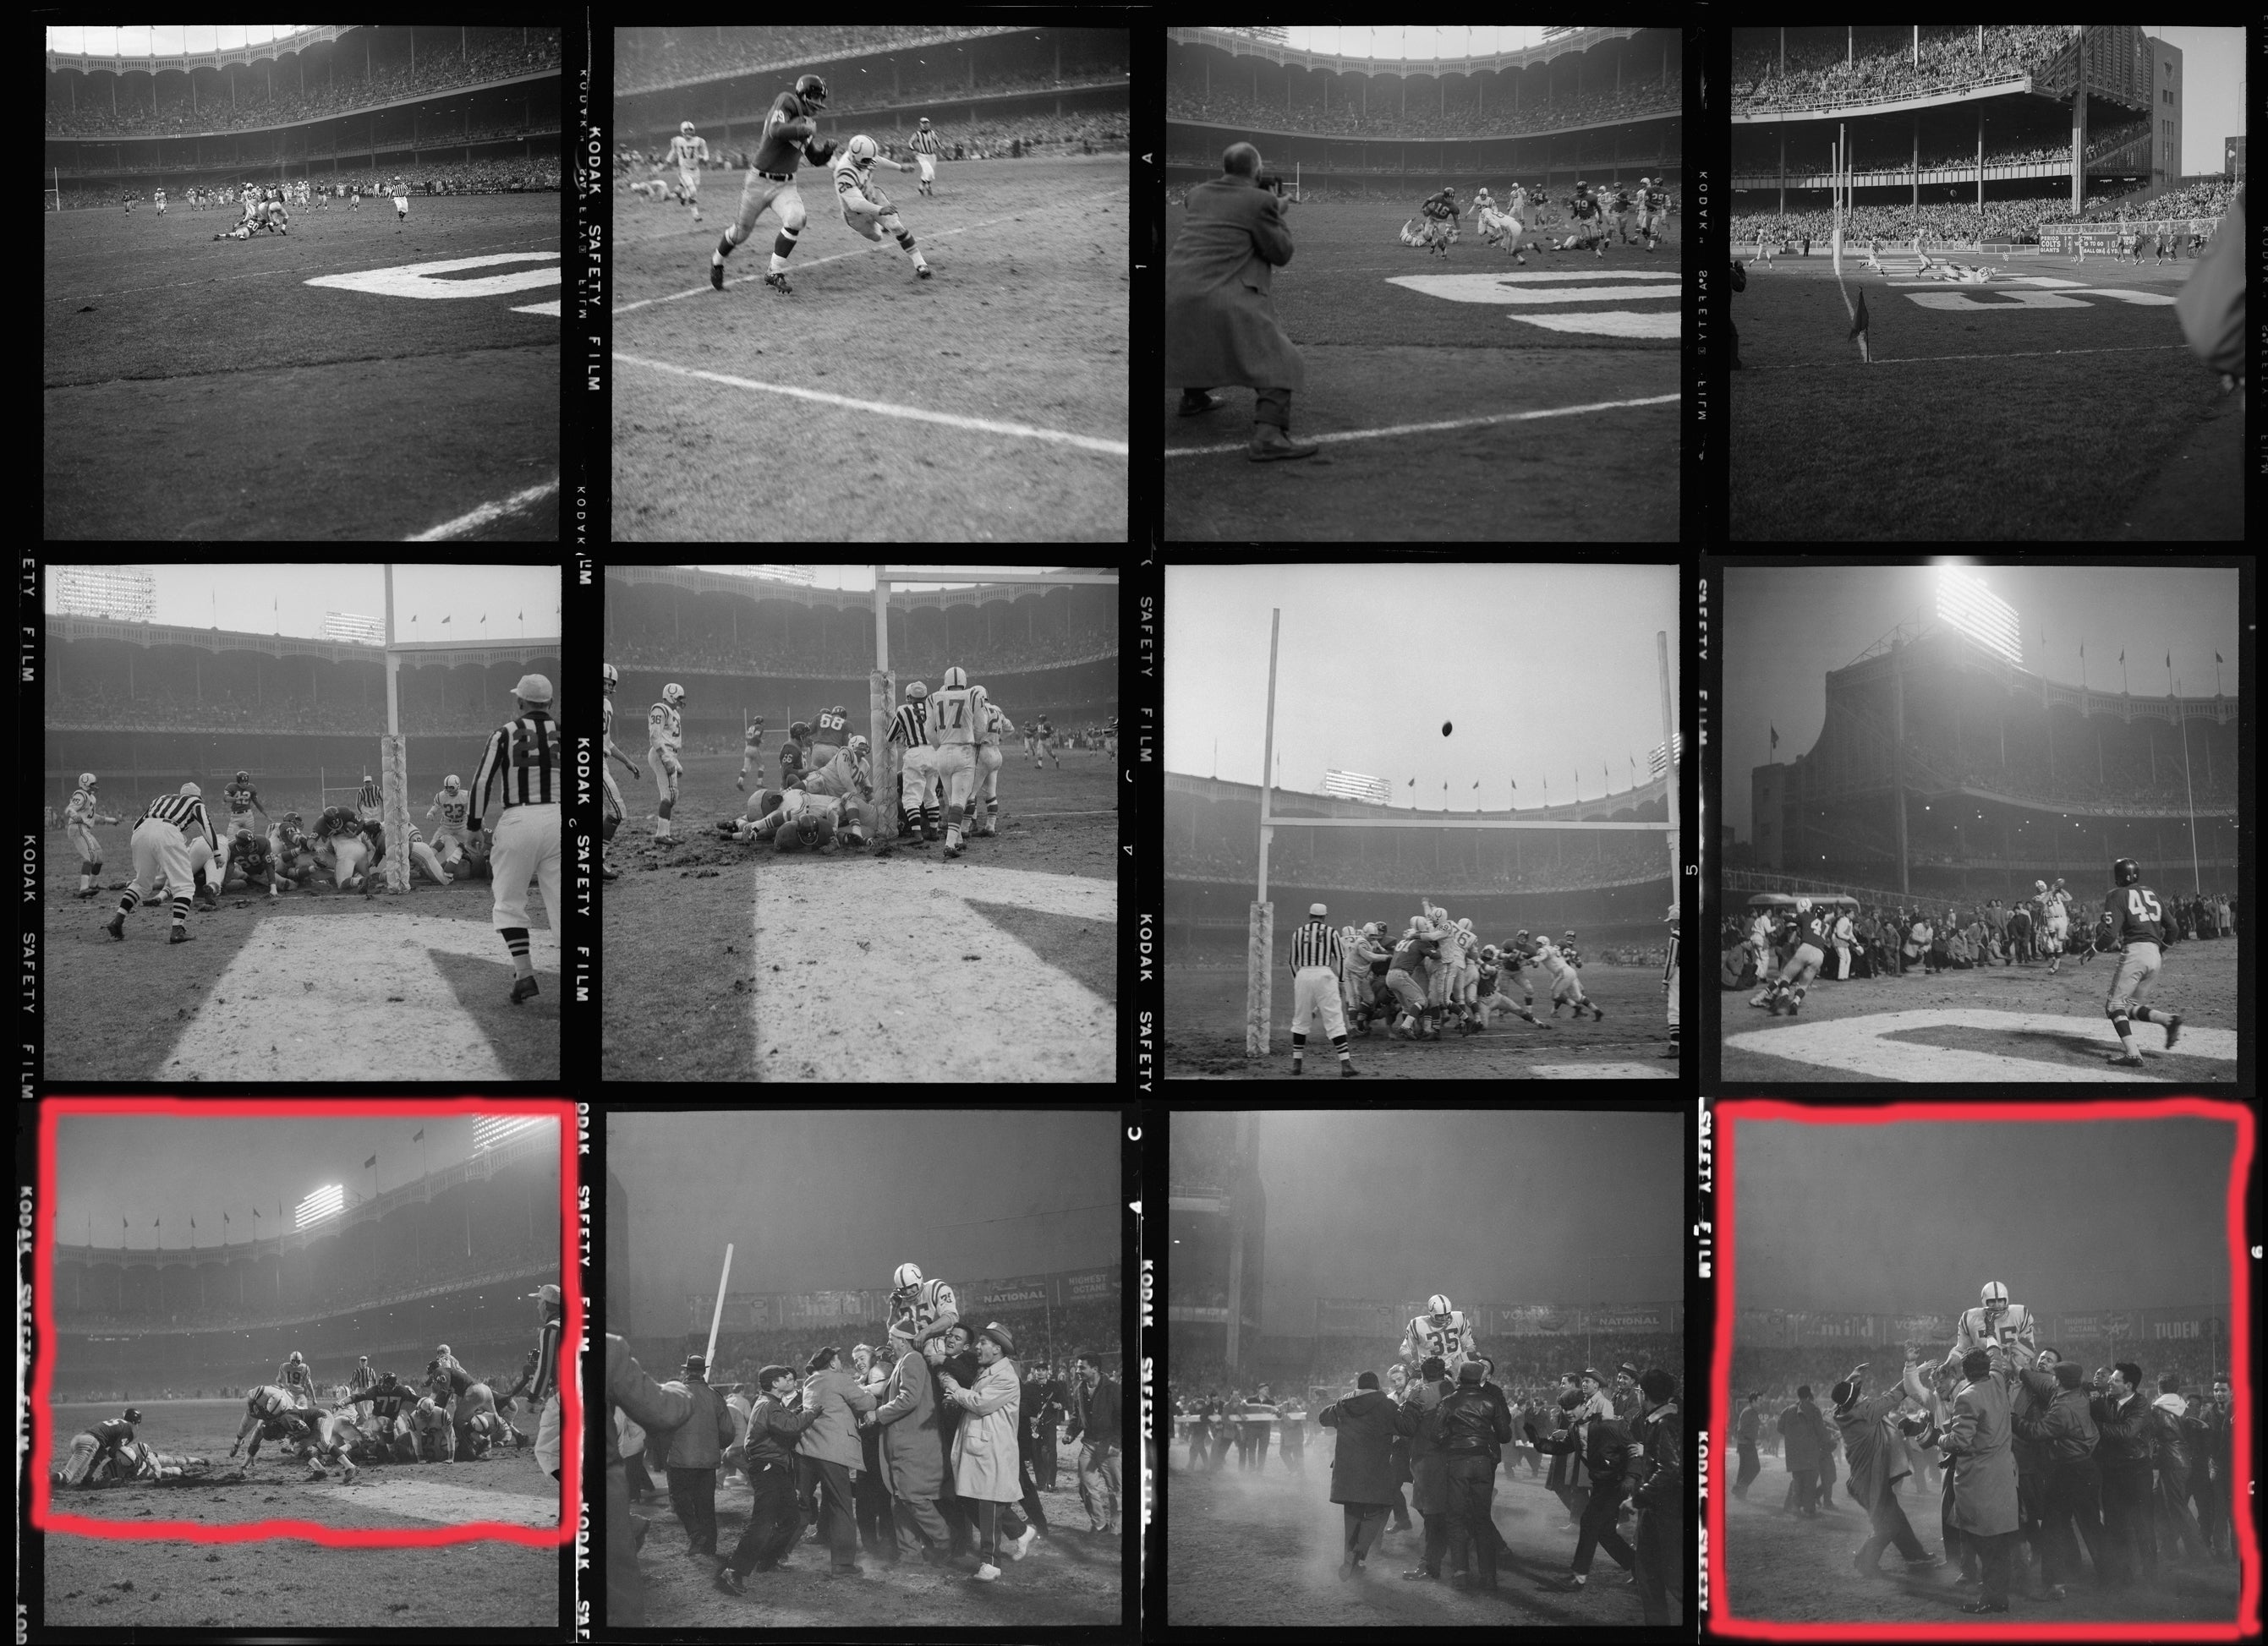 Alan Ameche scoring winning touchdown, Baltimore Colts vs New York Giants,  1958 NFL Championship - Holden Luntz Gallery